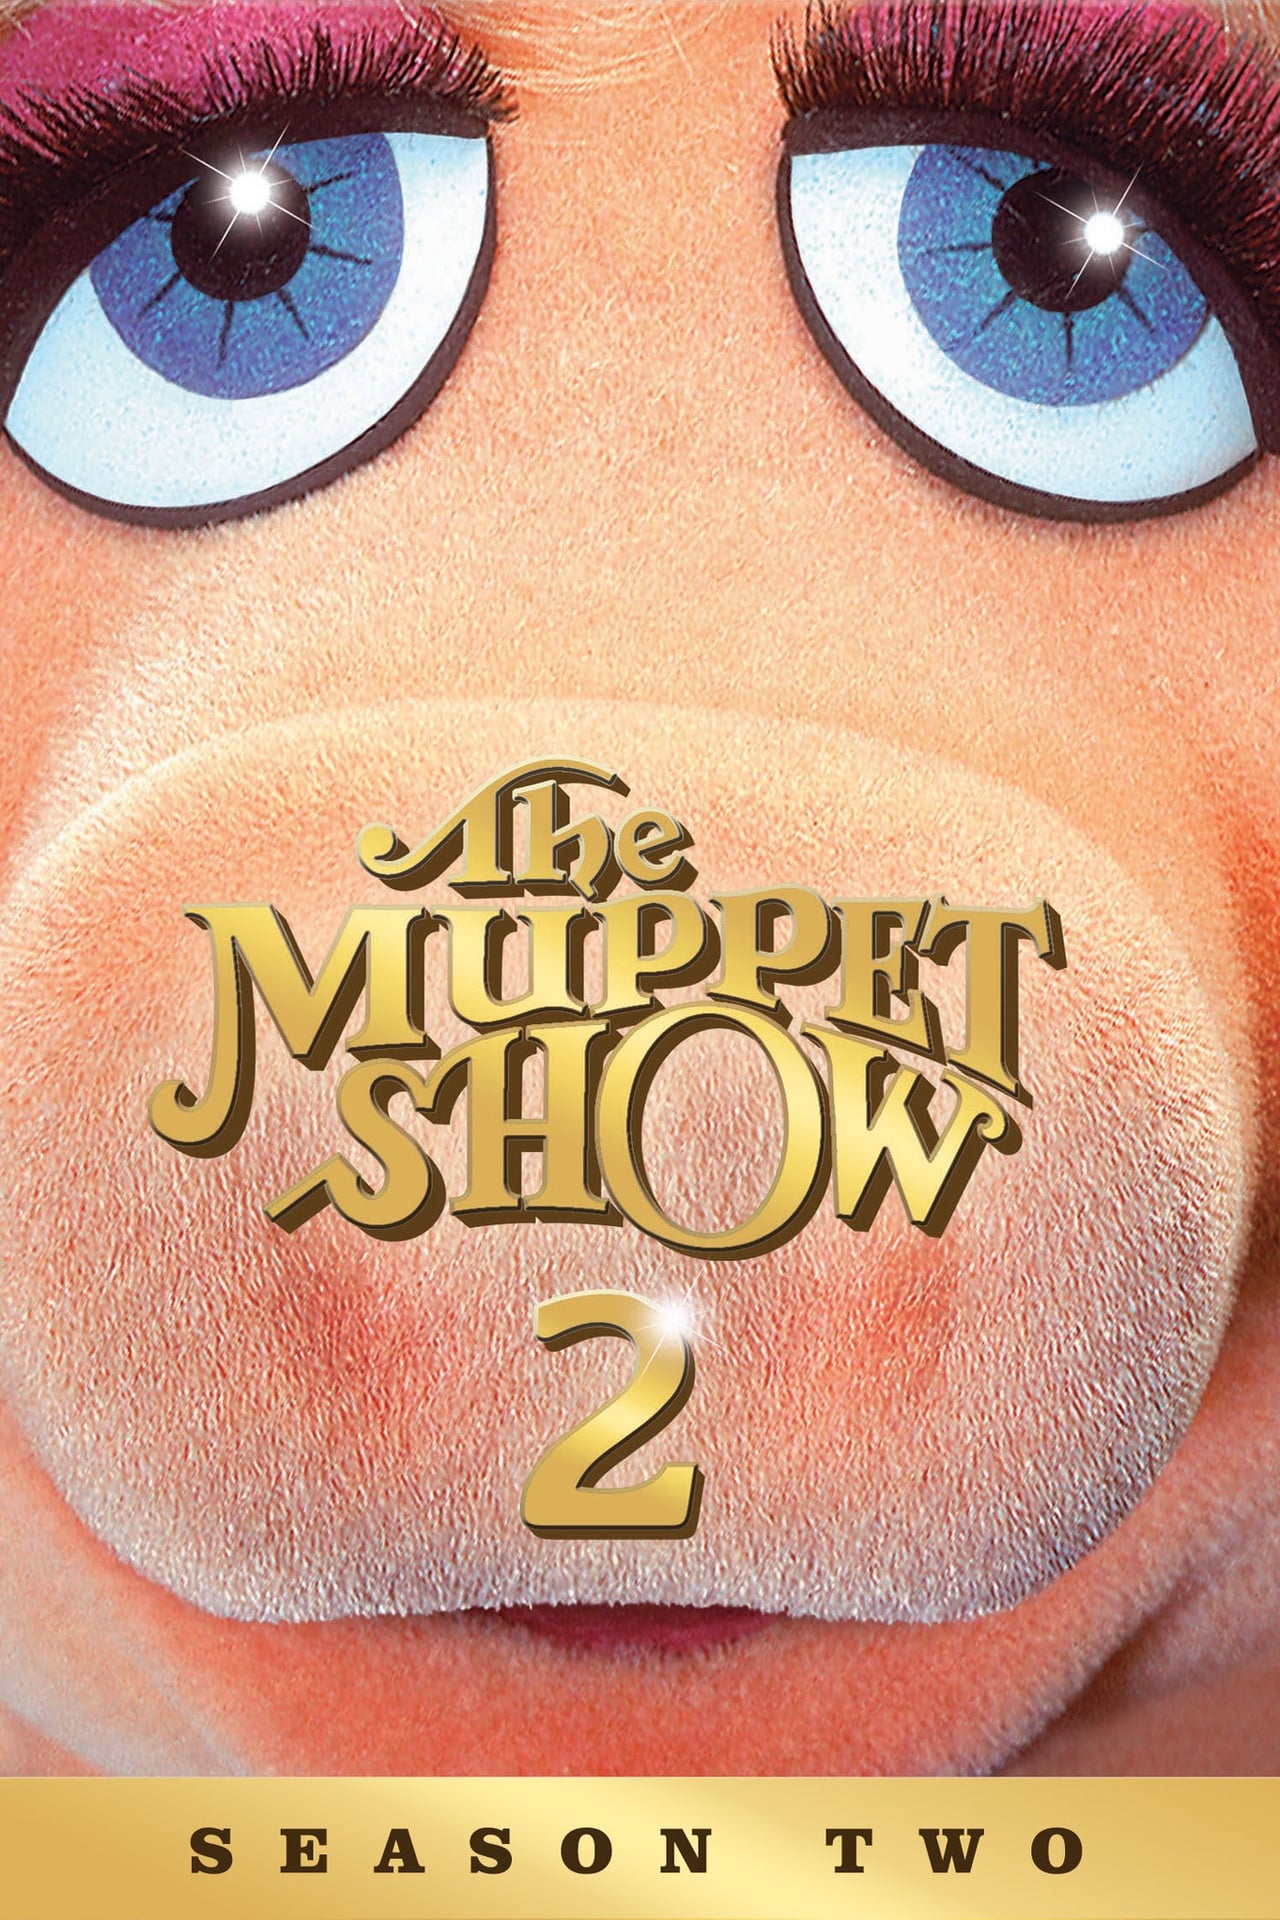 The Muppet Show Season 2